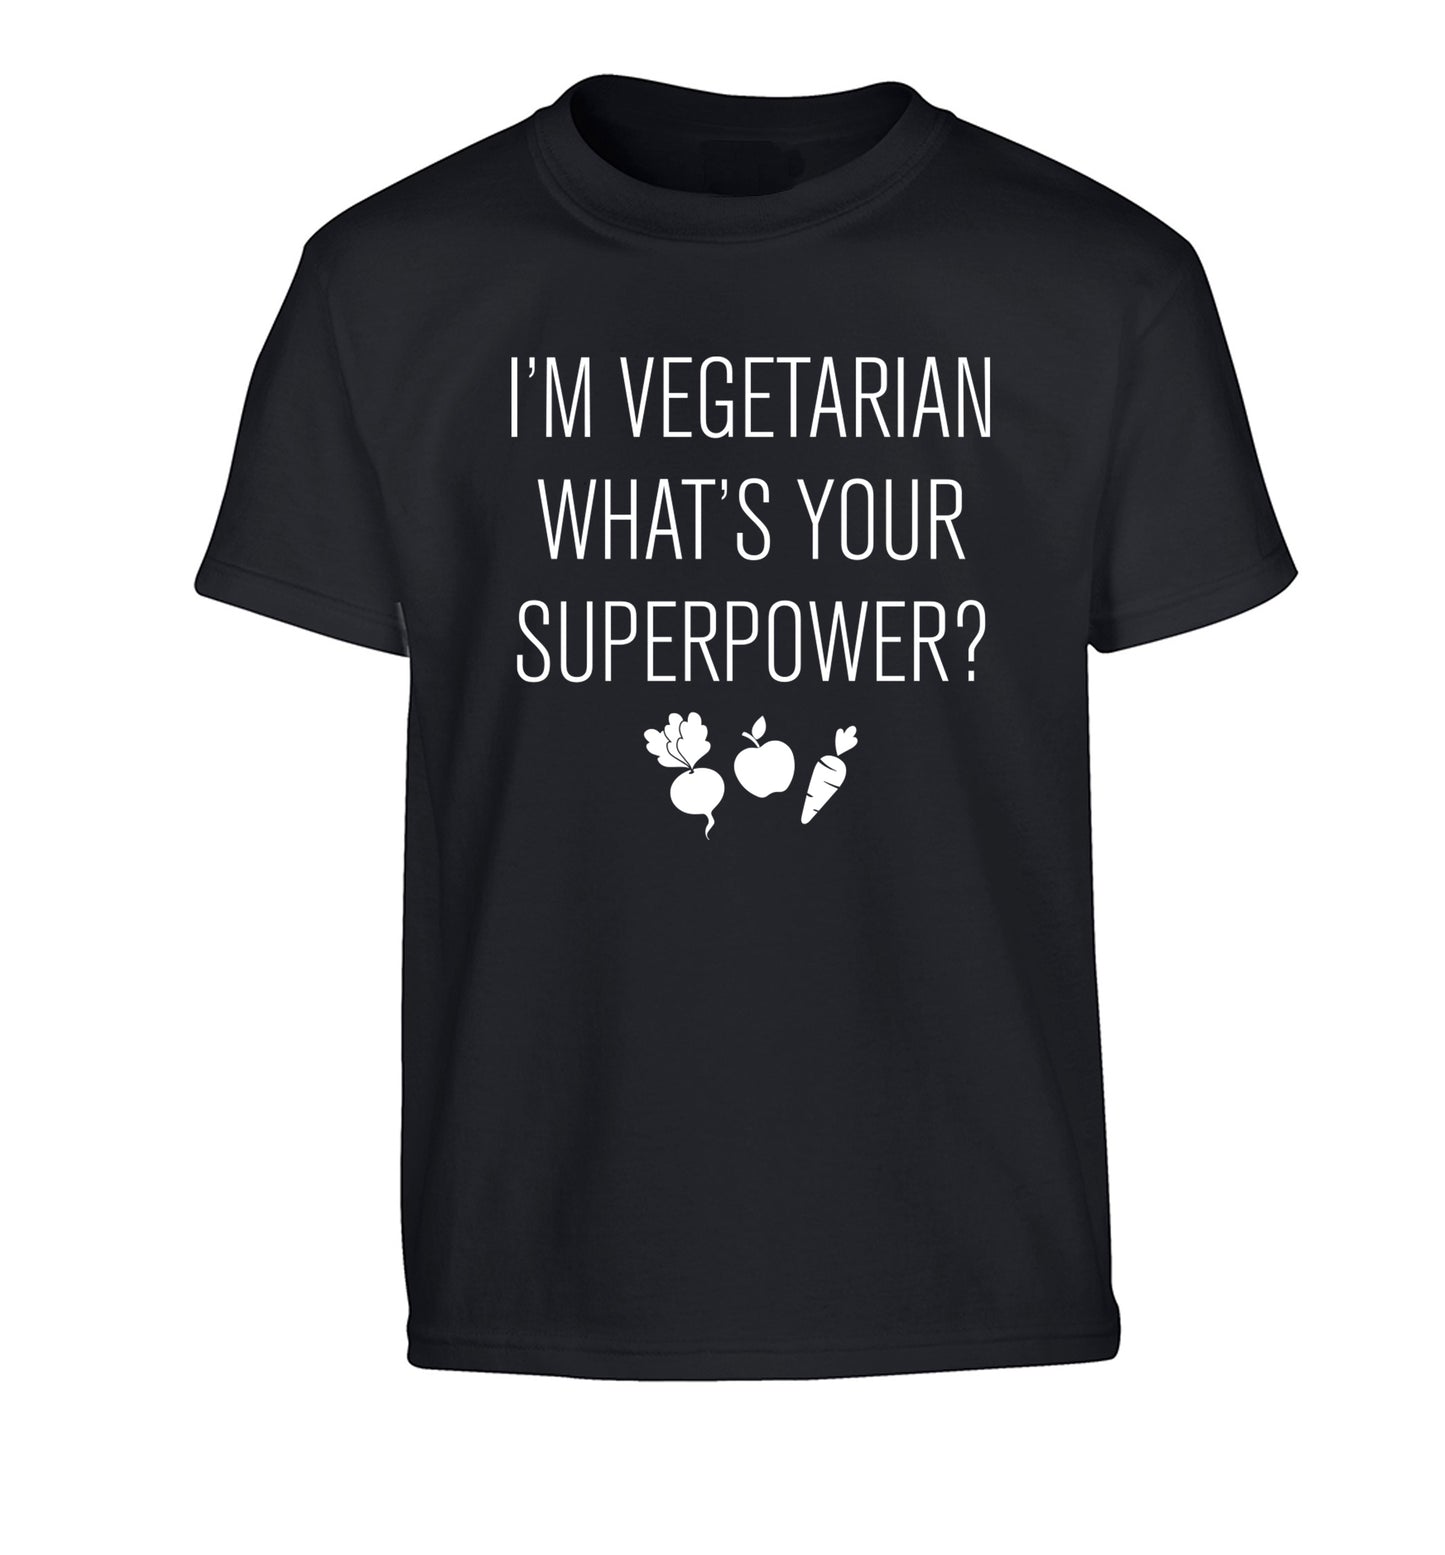 I'm vegetarian what's your superpower? Children's black Tshirt 12-13 Years